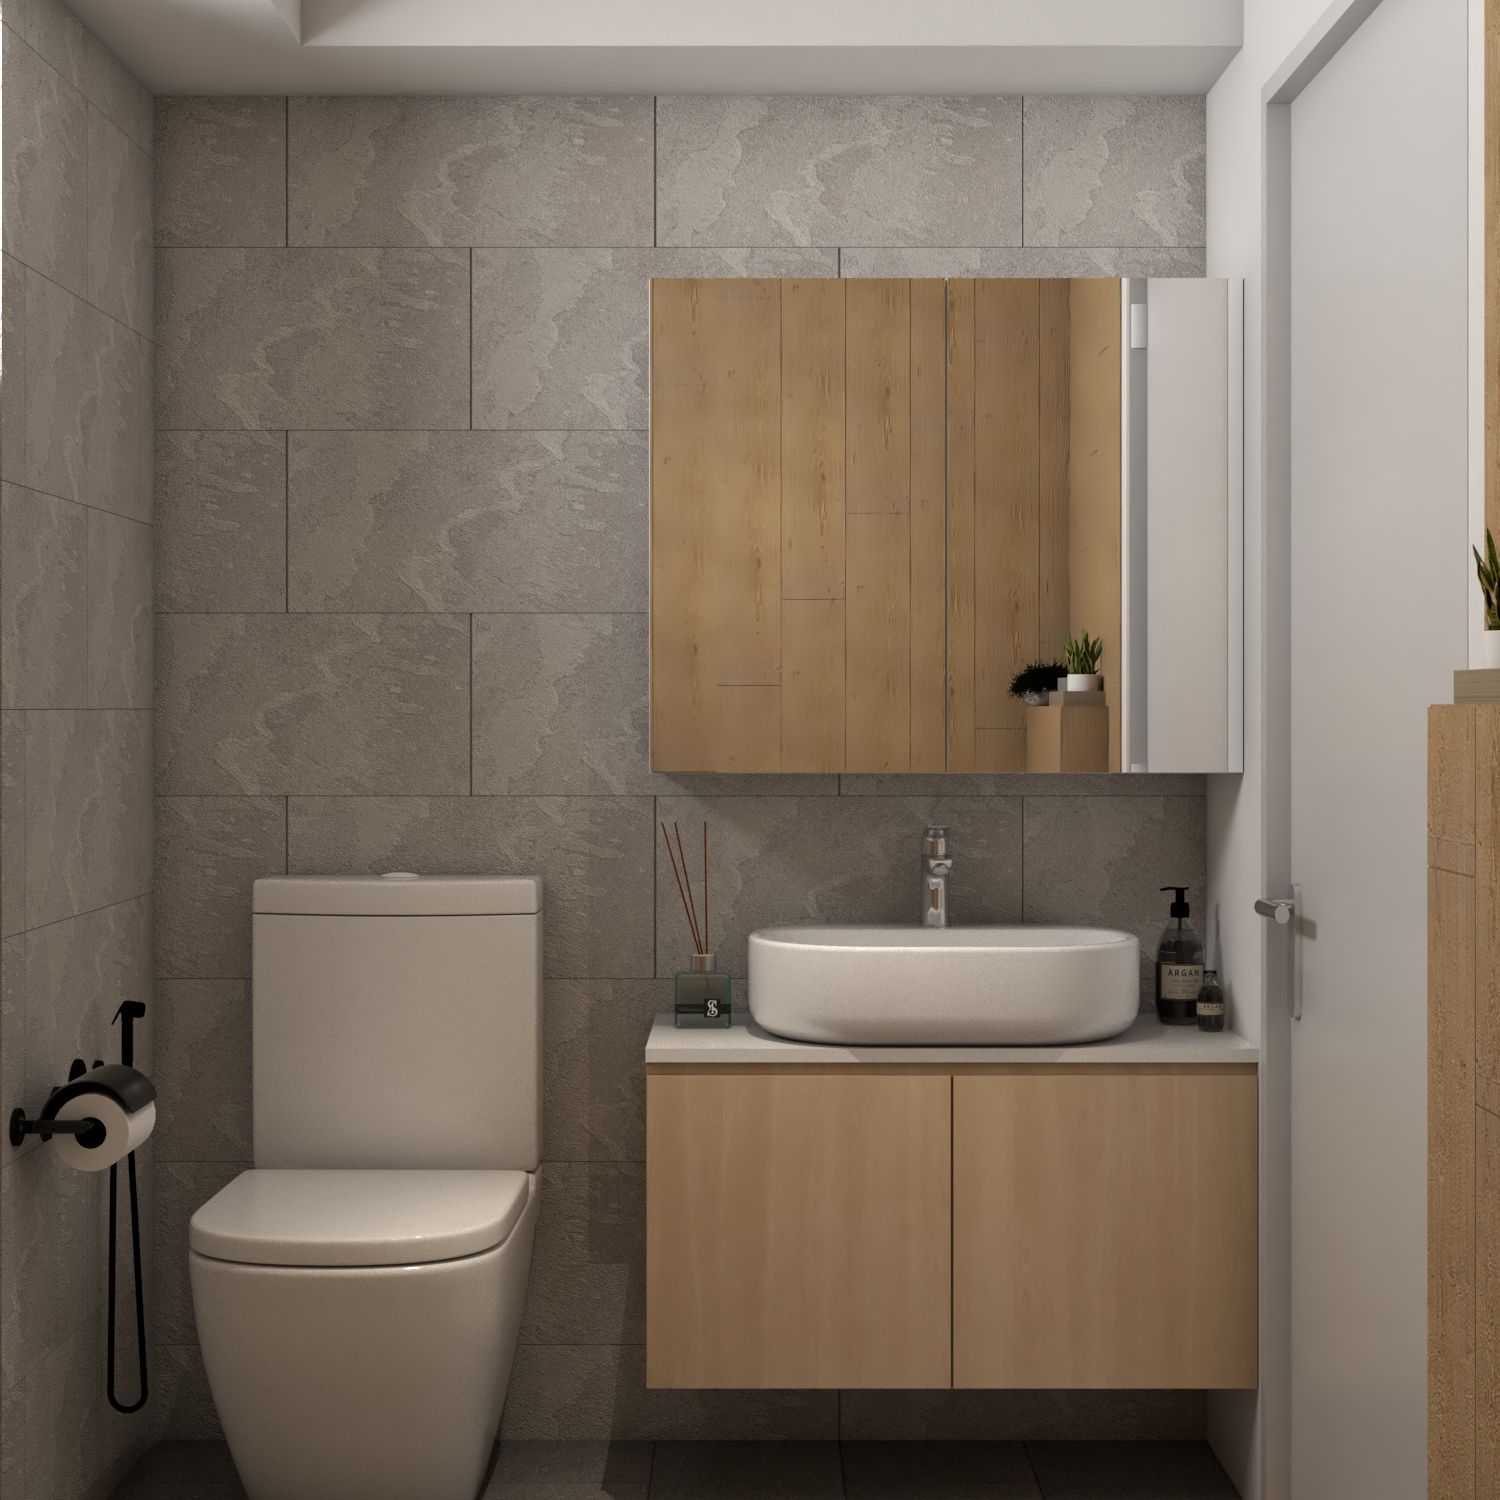 Modern Bathroom Design With Wooden Vanity Unit